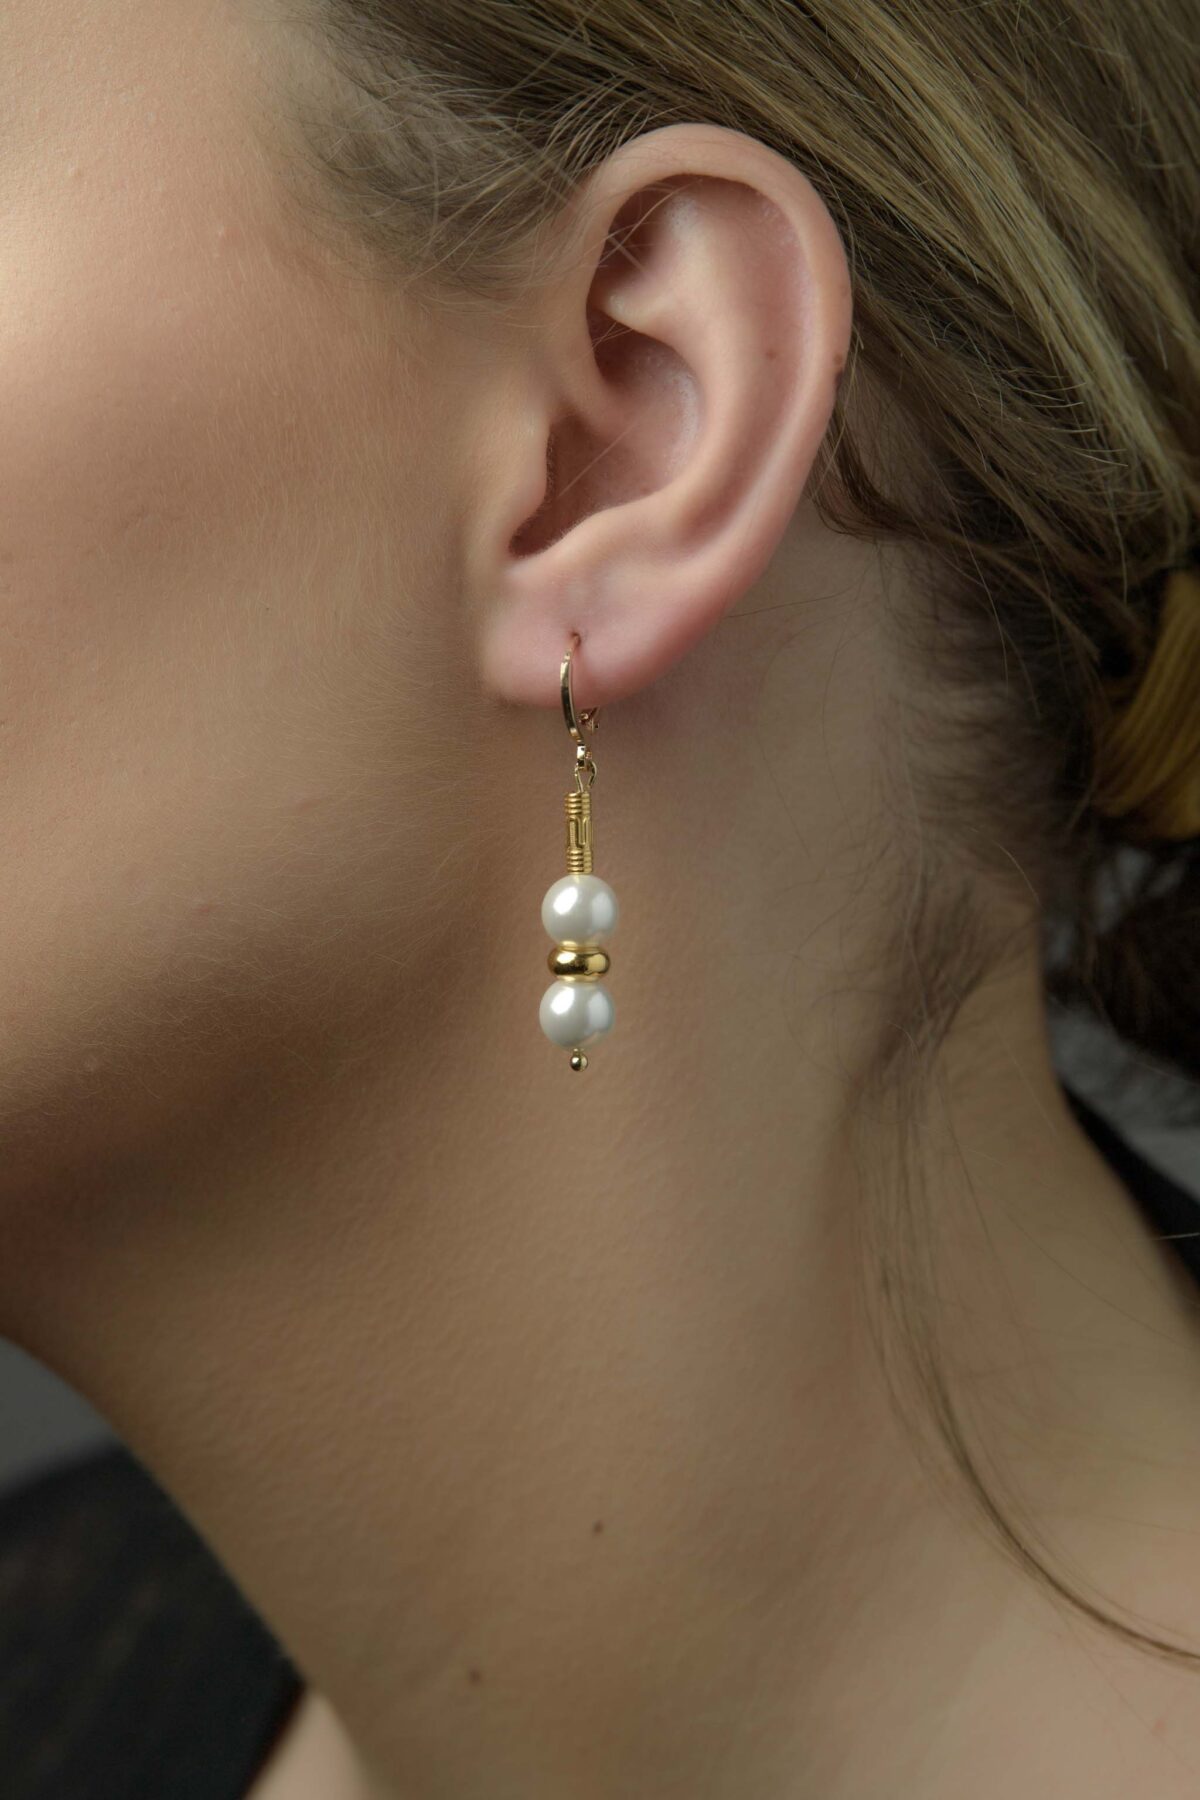 Earrings Dangling Pearls